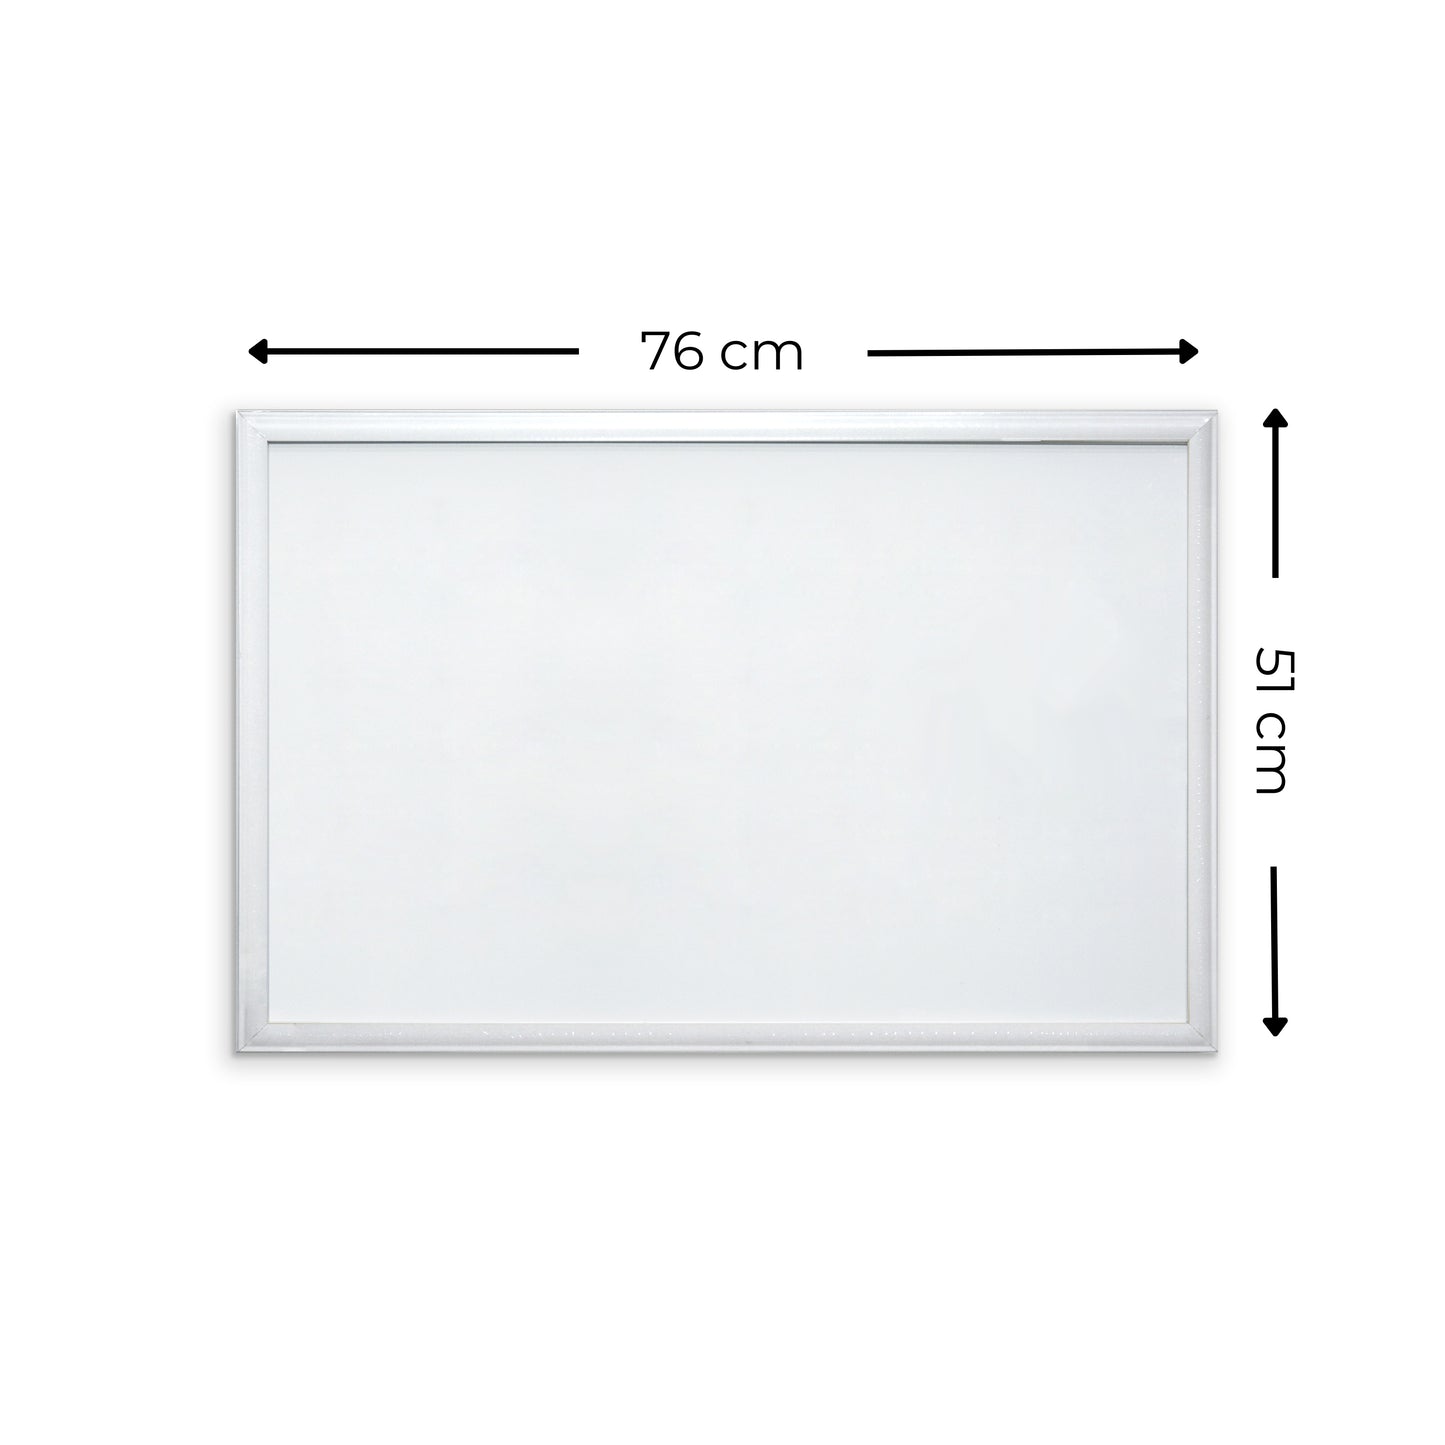 White MDF Frame Magnetic Dry Erase Board - 51 x 76cm